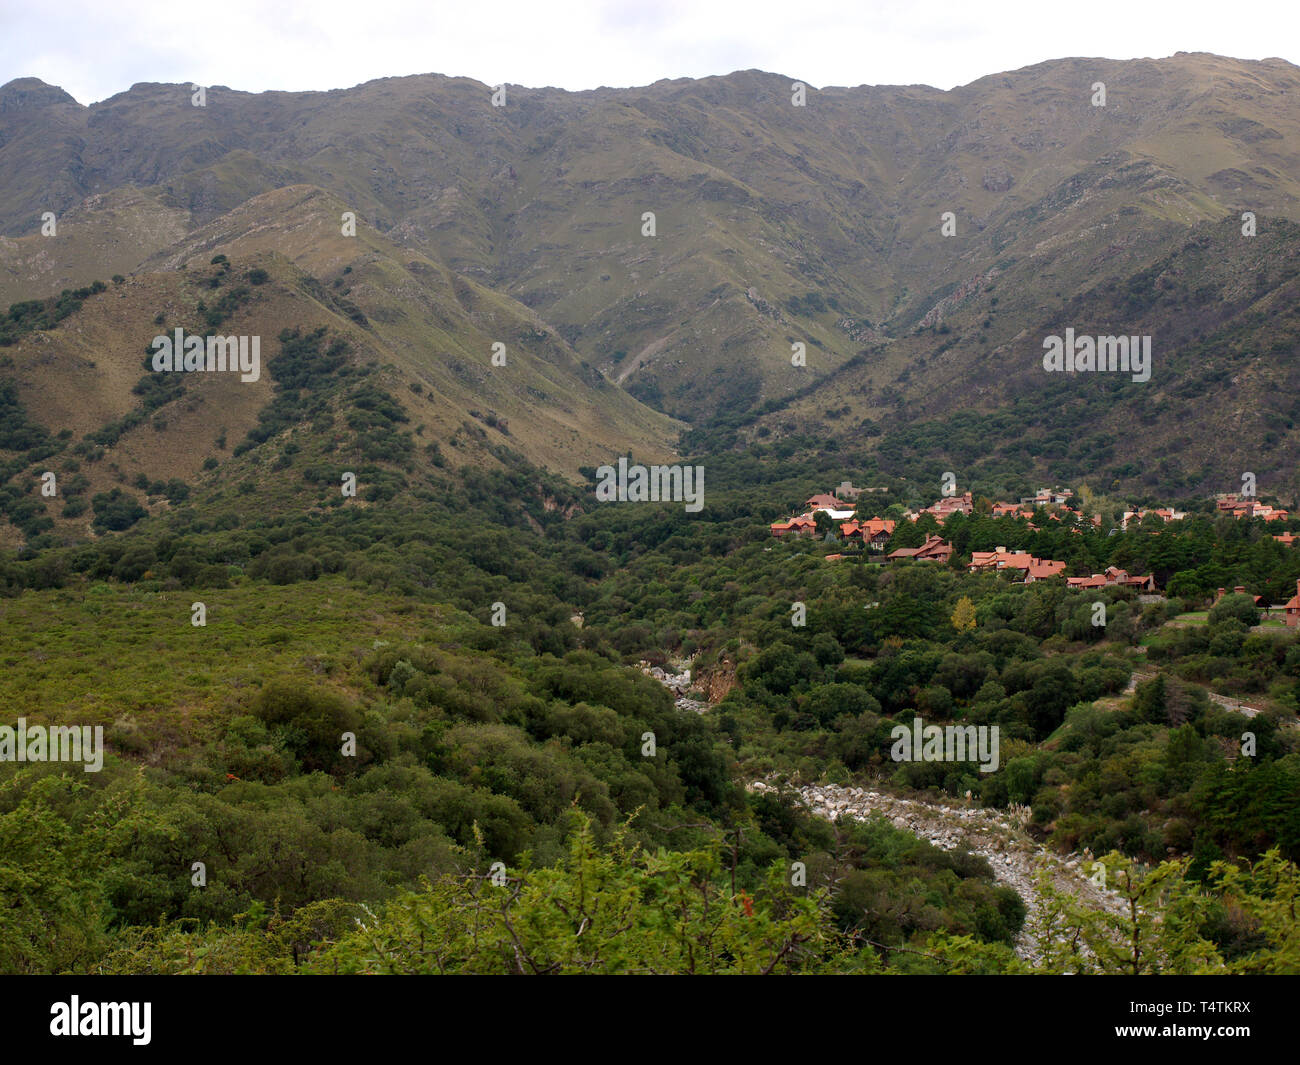 A neighborhood by the mountains in Villa de Merlo, San Luis, Argentina. Stock Photo